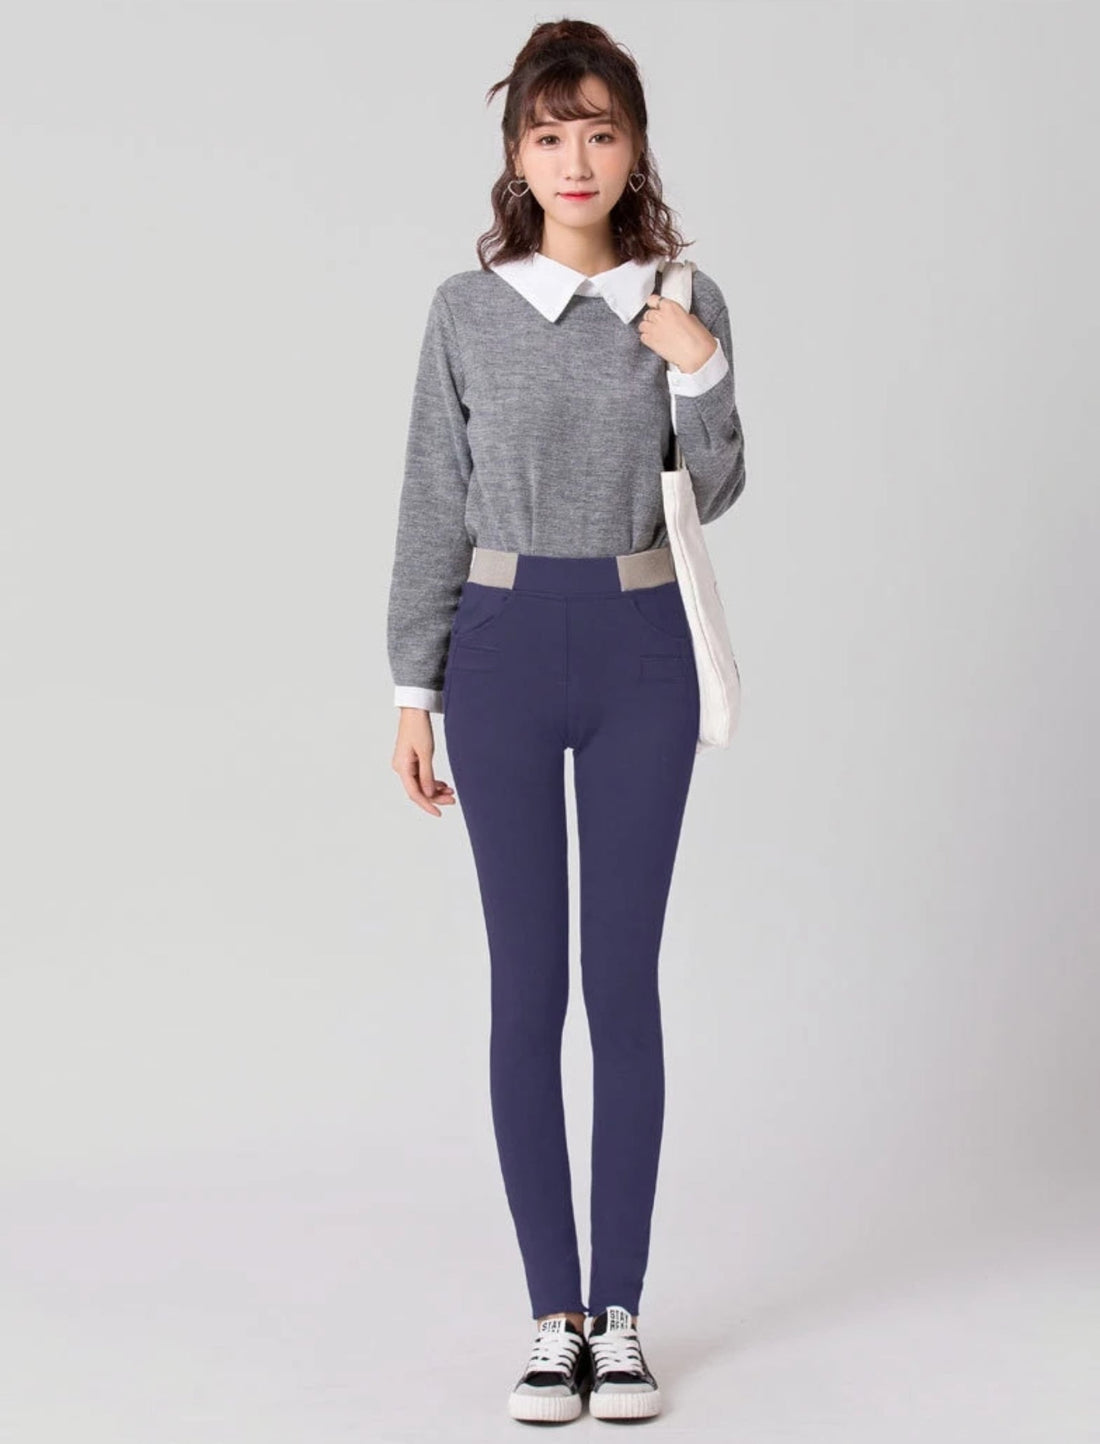 Women's Winter Warm Stretchy Pants | Plus Size